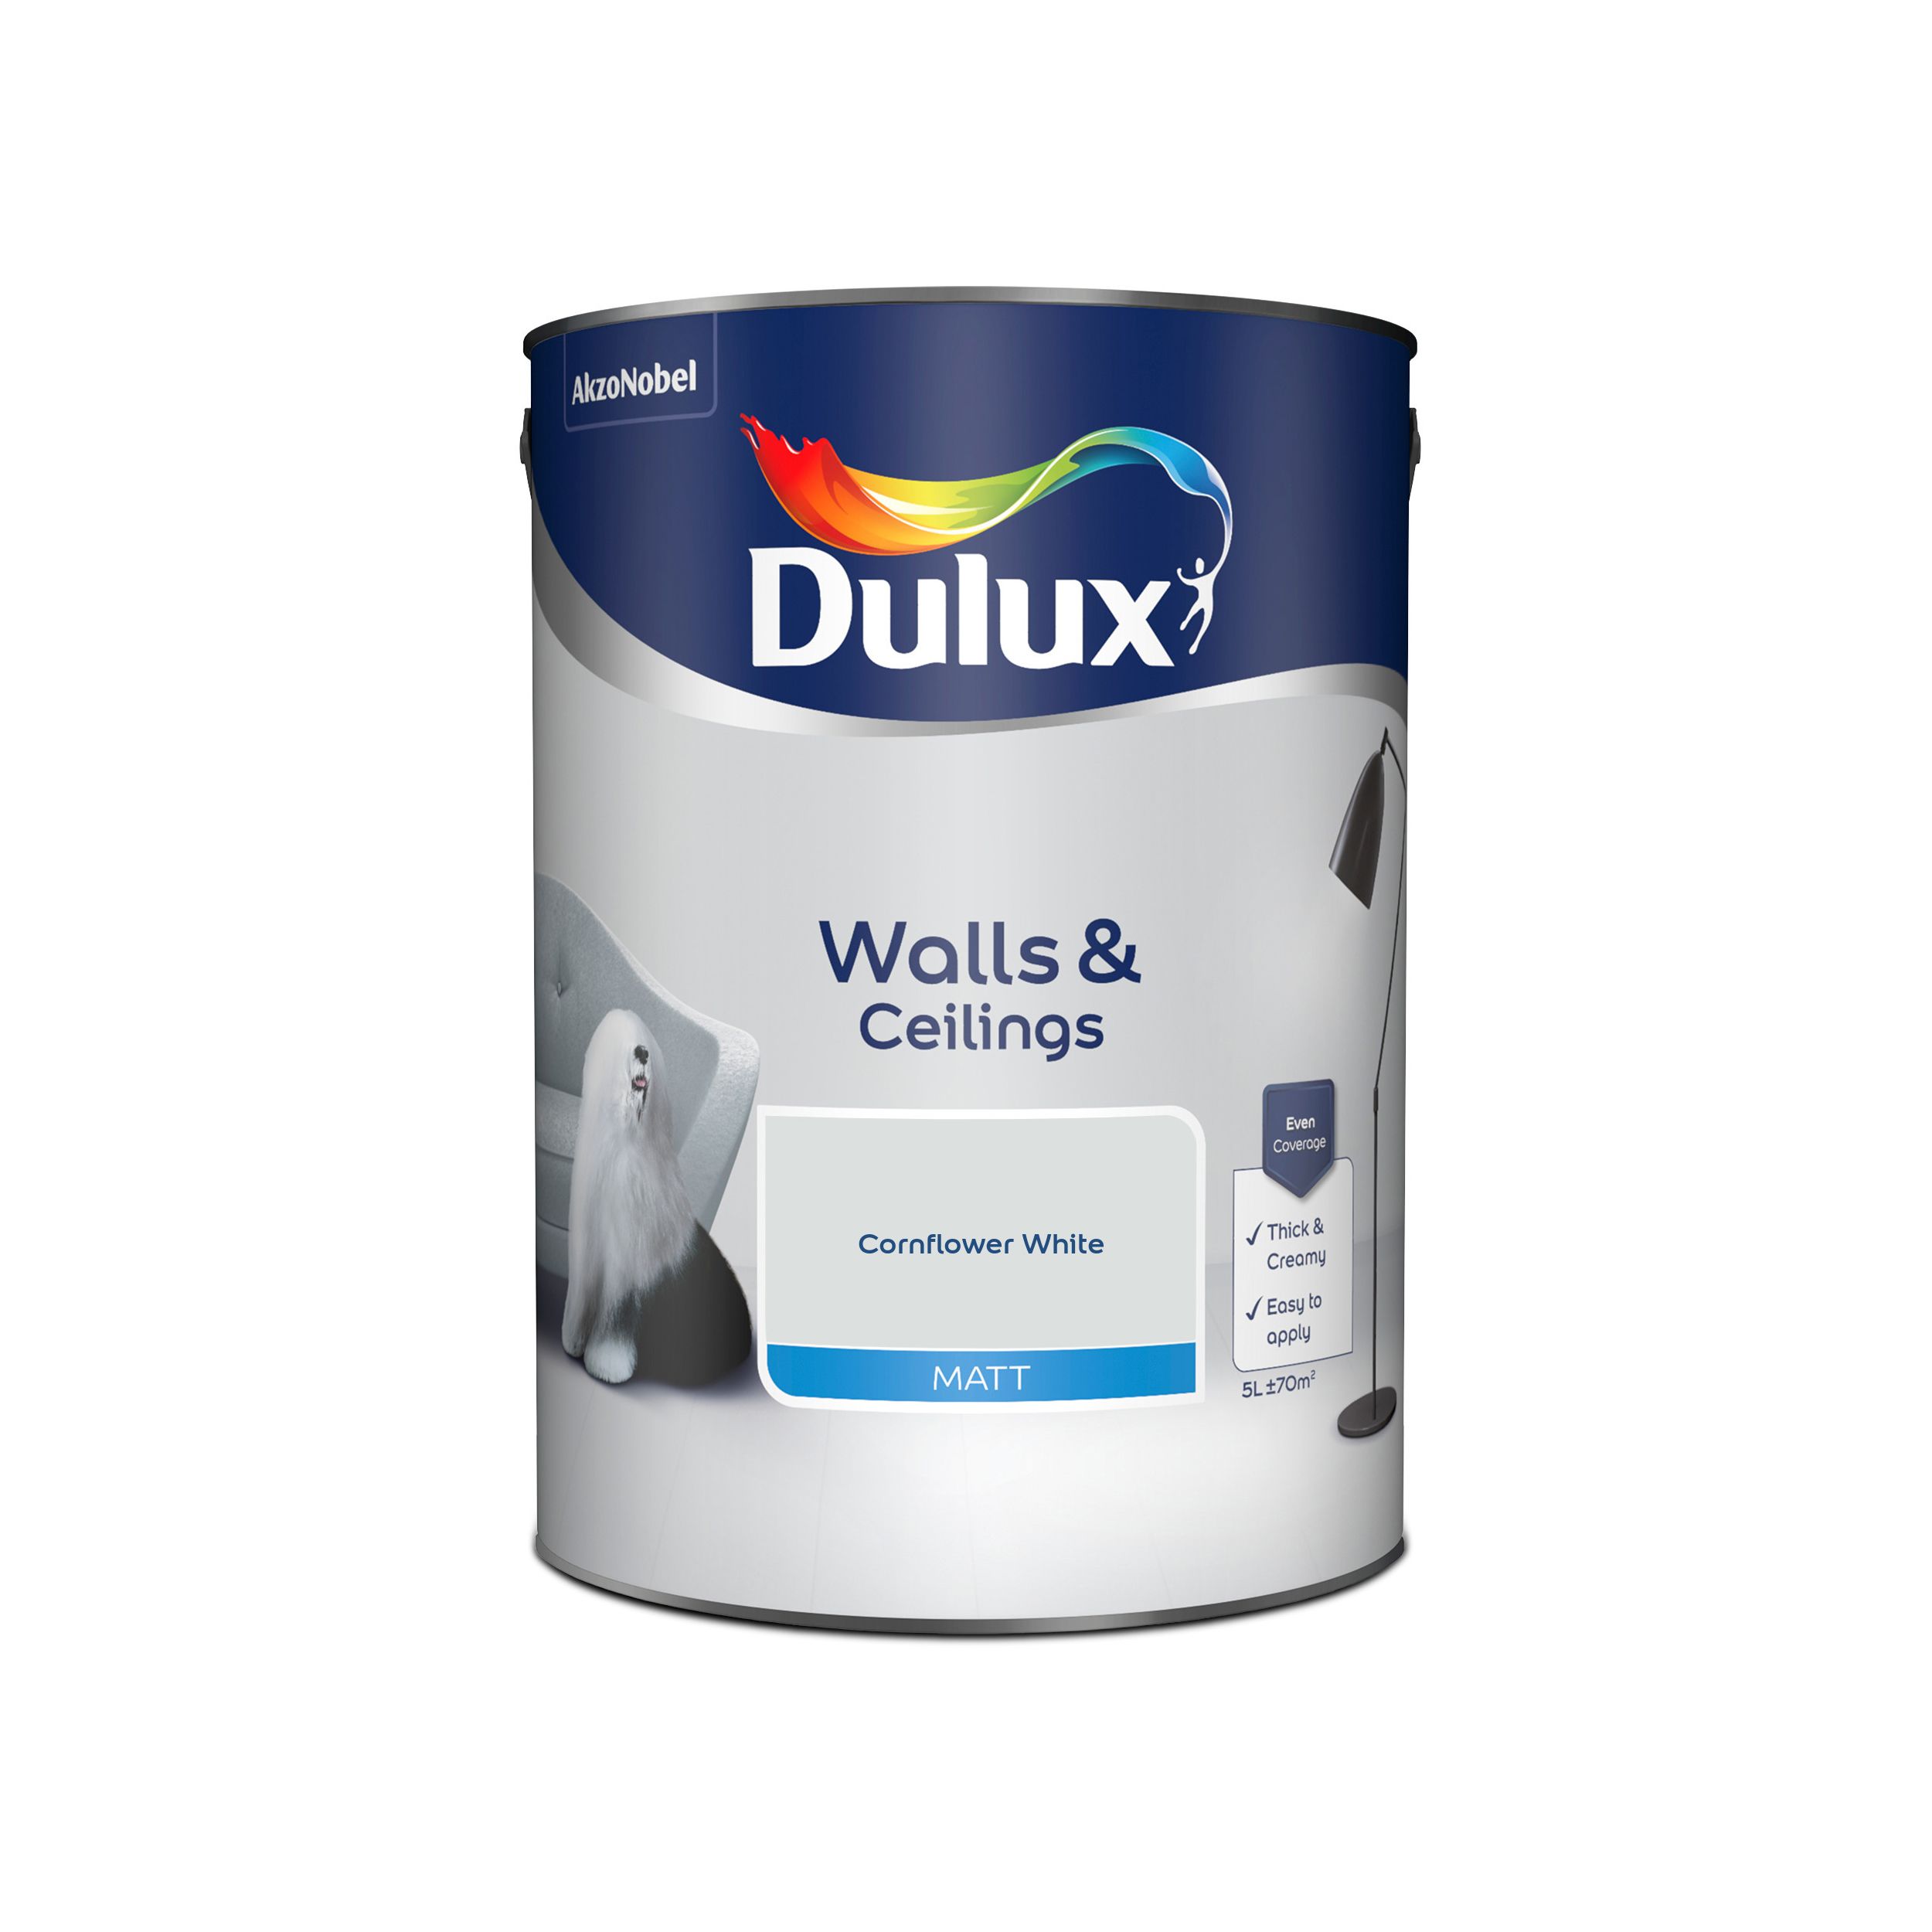 Dulux Walls & ceilings Cornflower white Matt Emulsion paint, 5L